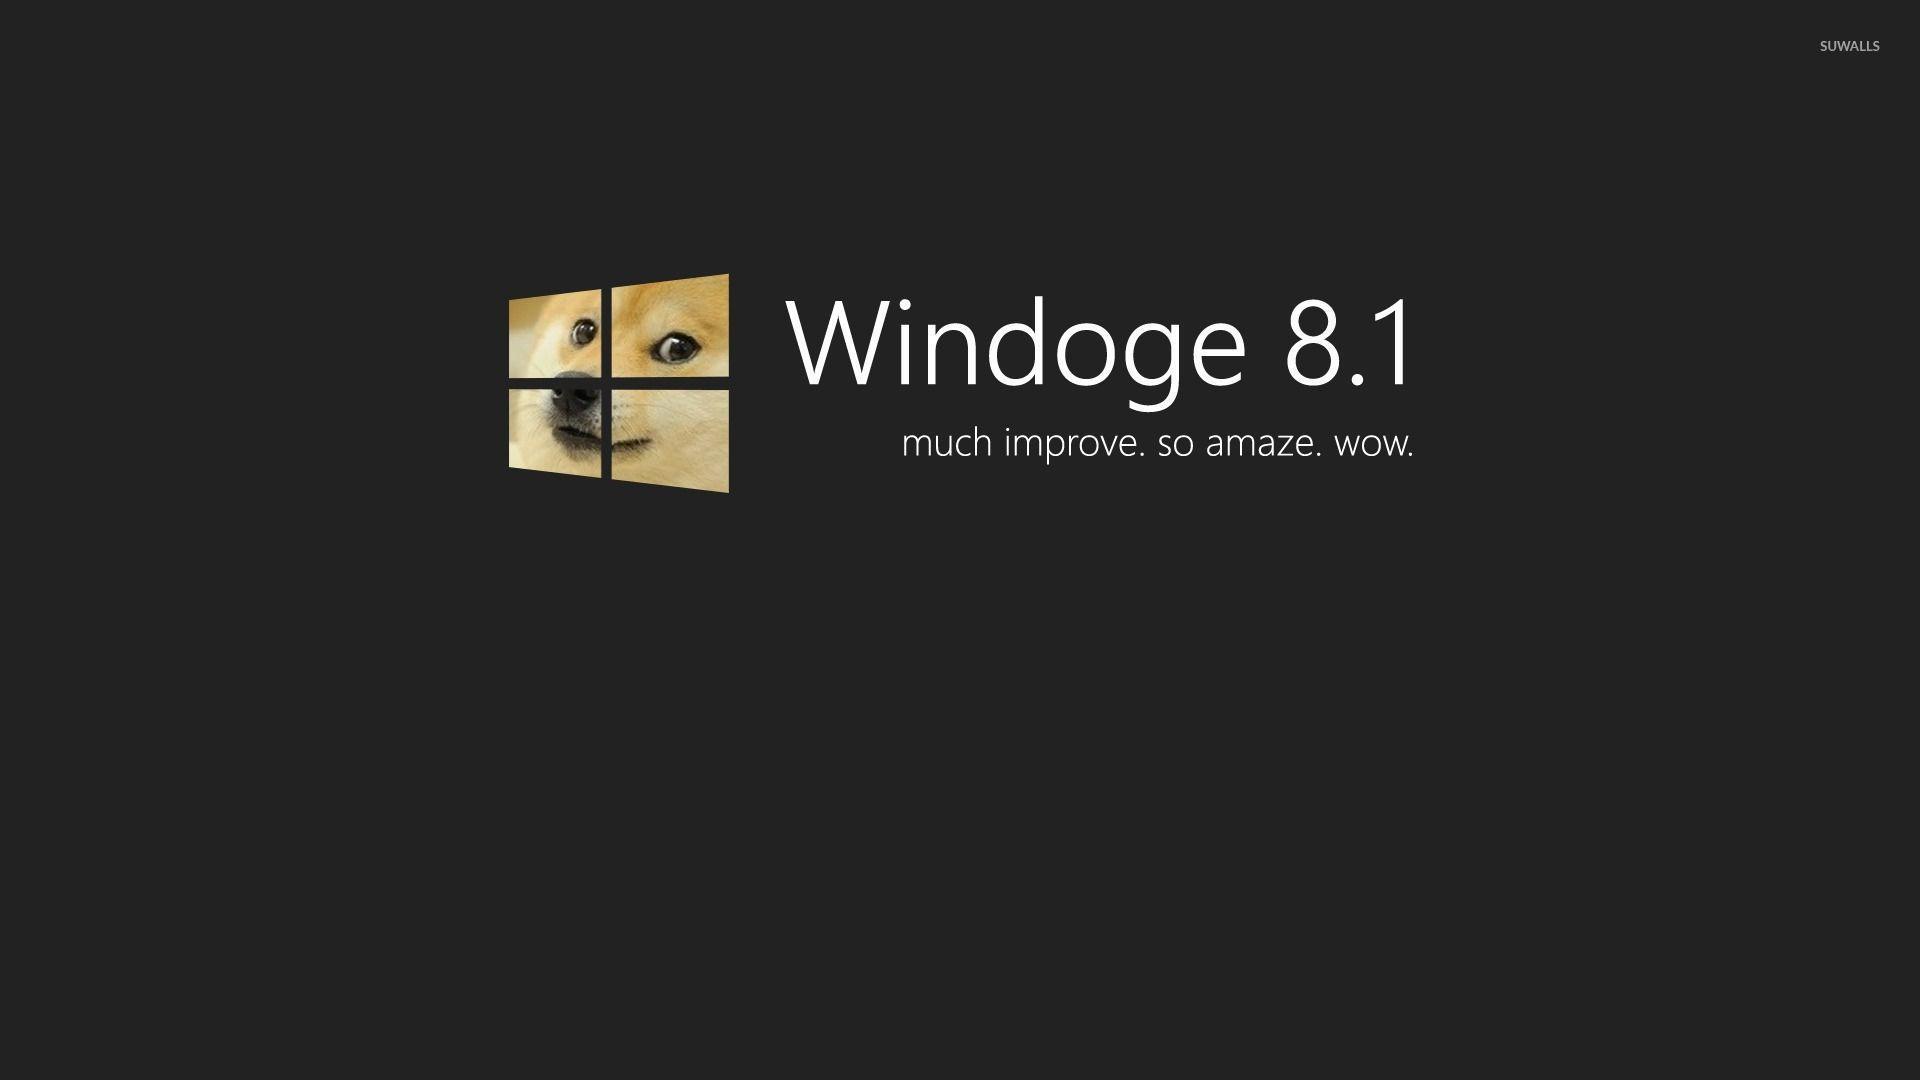 Doge Windows 8.1 wallpaper wallpaper